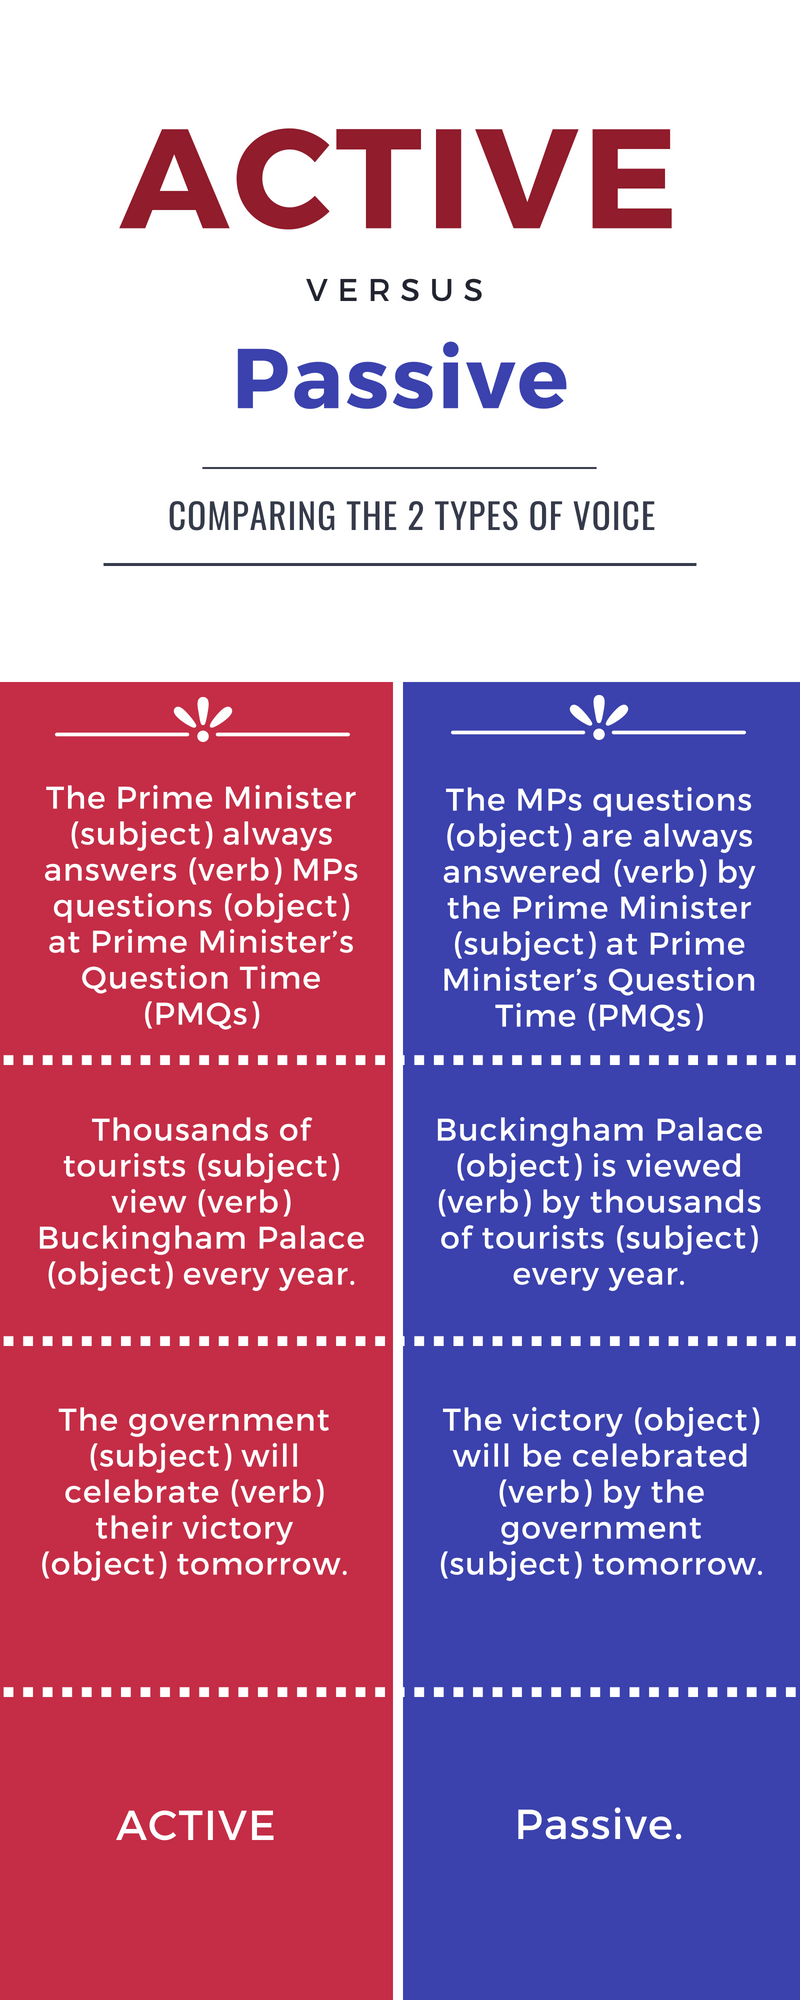 Examples of Passive Voice vs Active Voice - Britpolitics